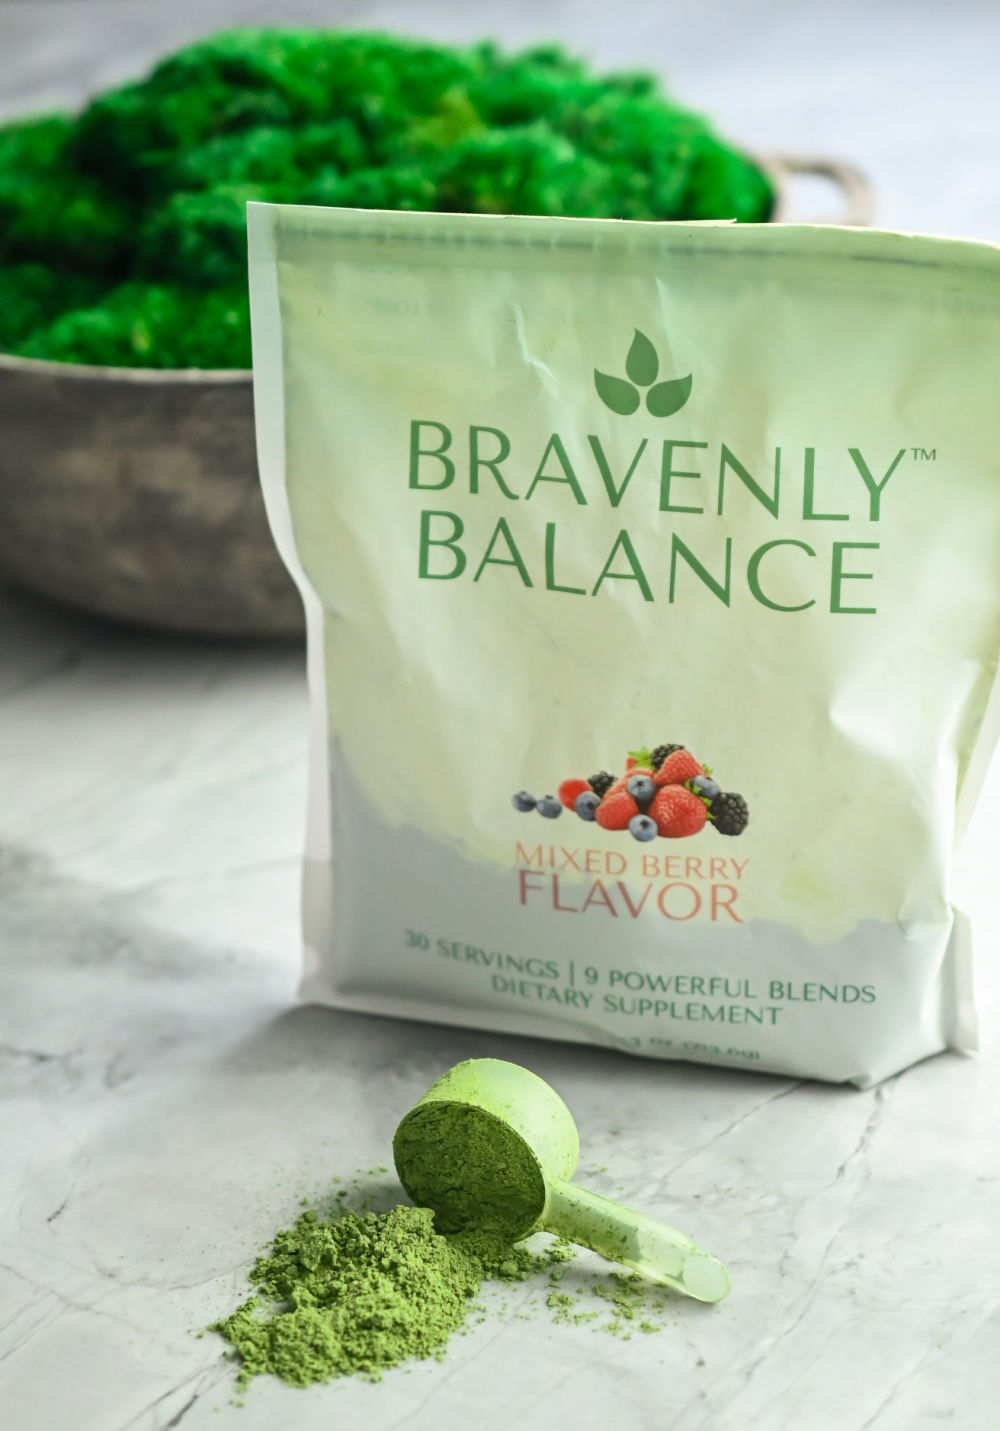 Bravenly Balance 9 Powerful blends supplement